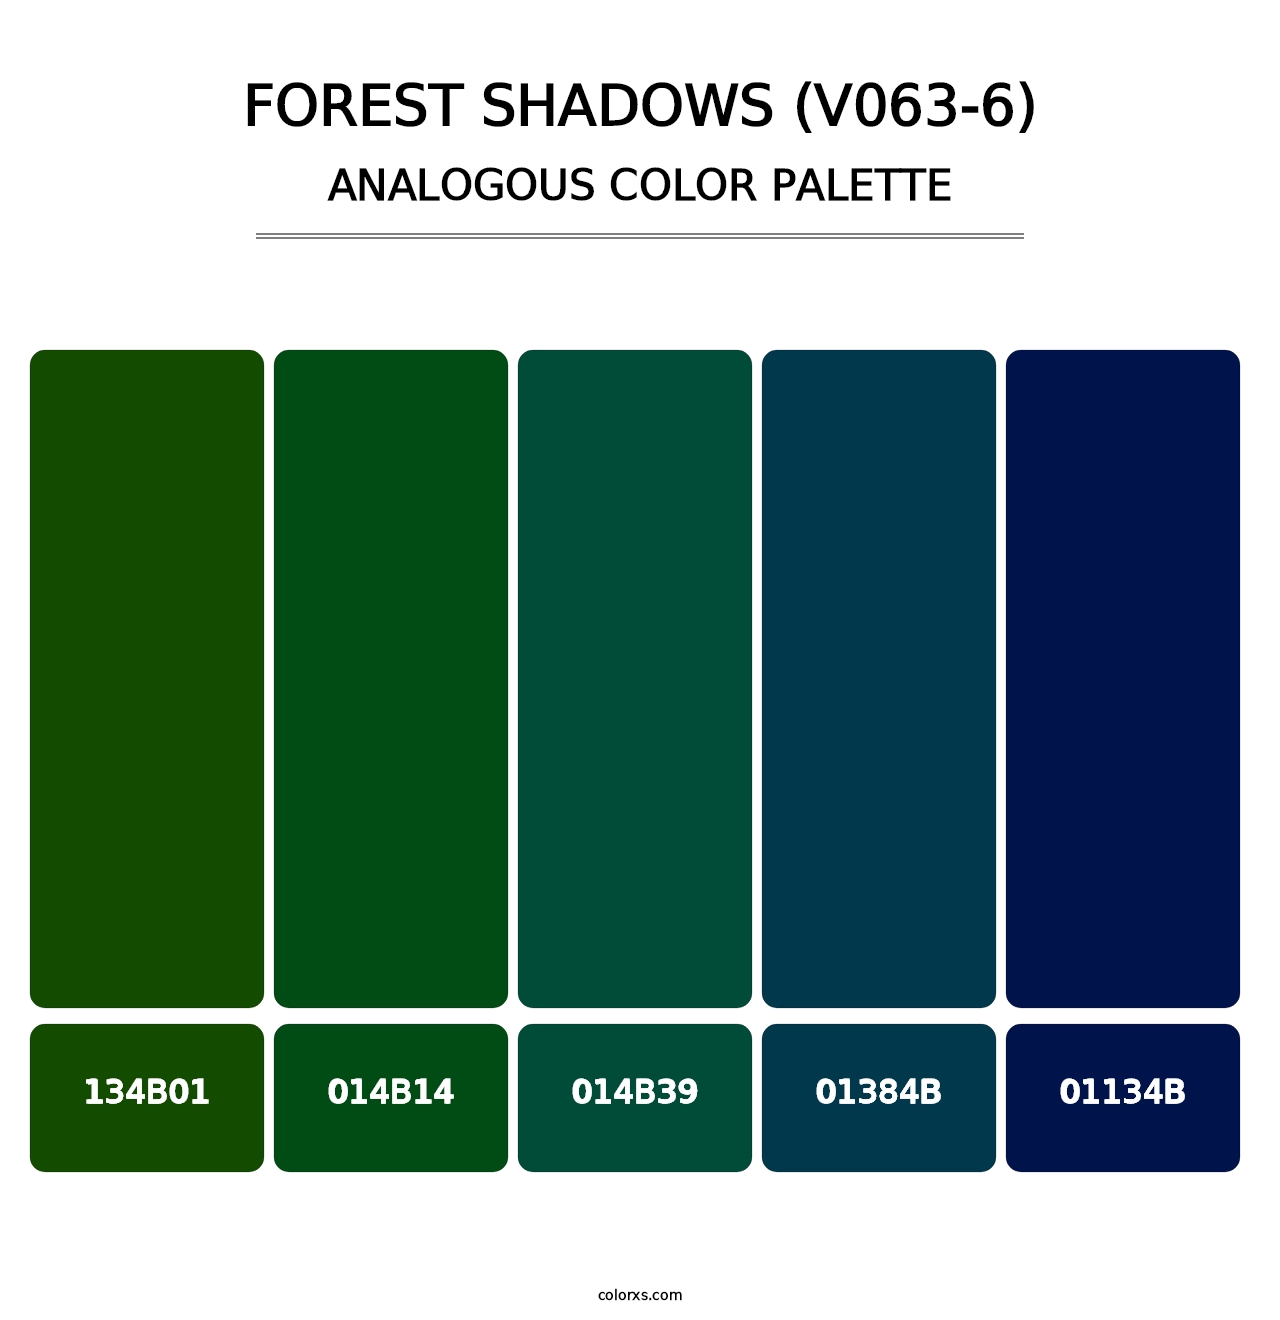 Forest Shadows (V063-6) - Analogous Color Palette